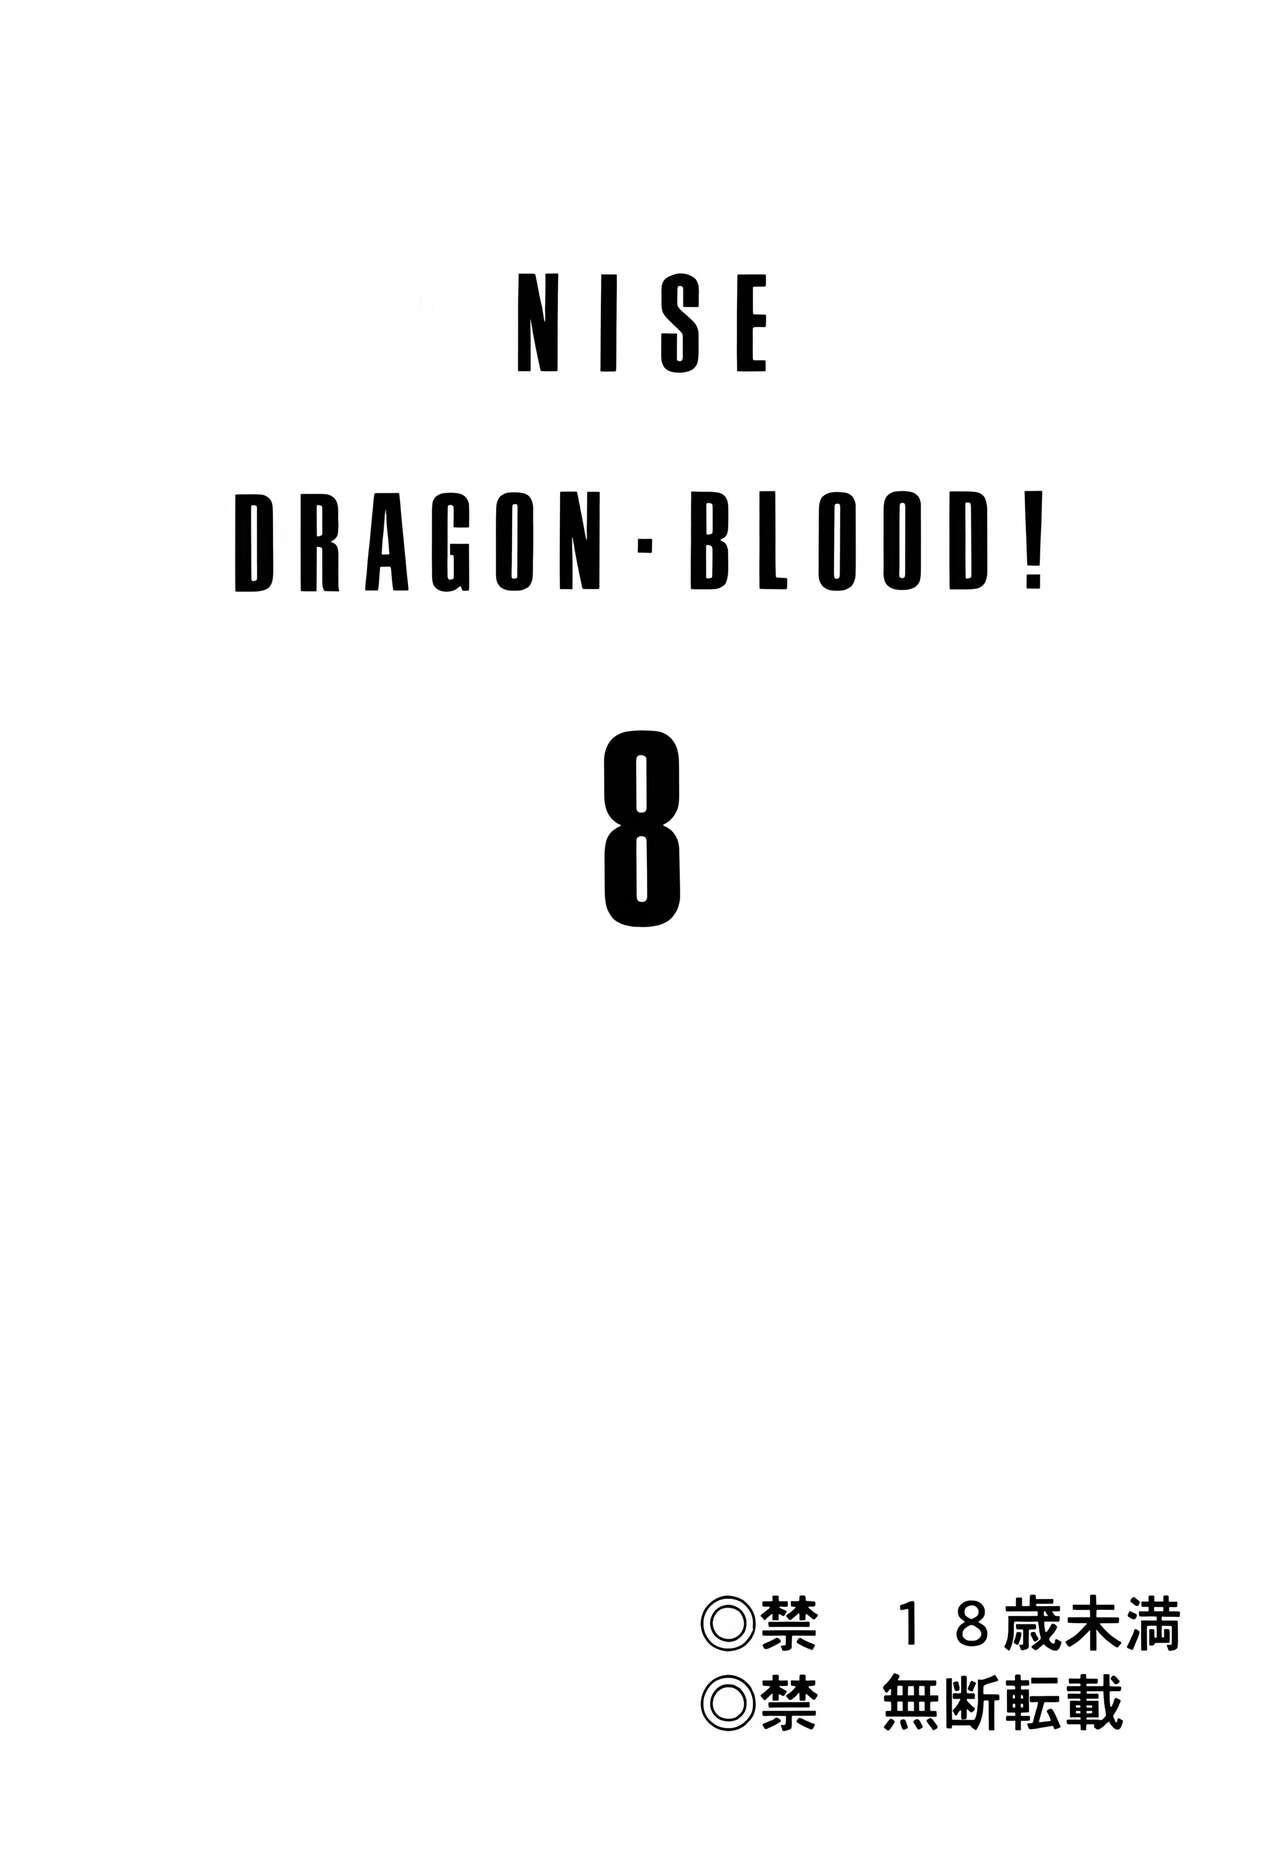 Nise DRAGON・BLOOD! 8. 1